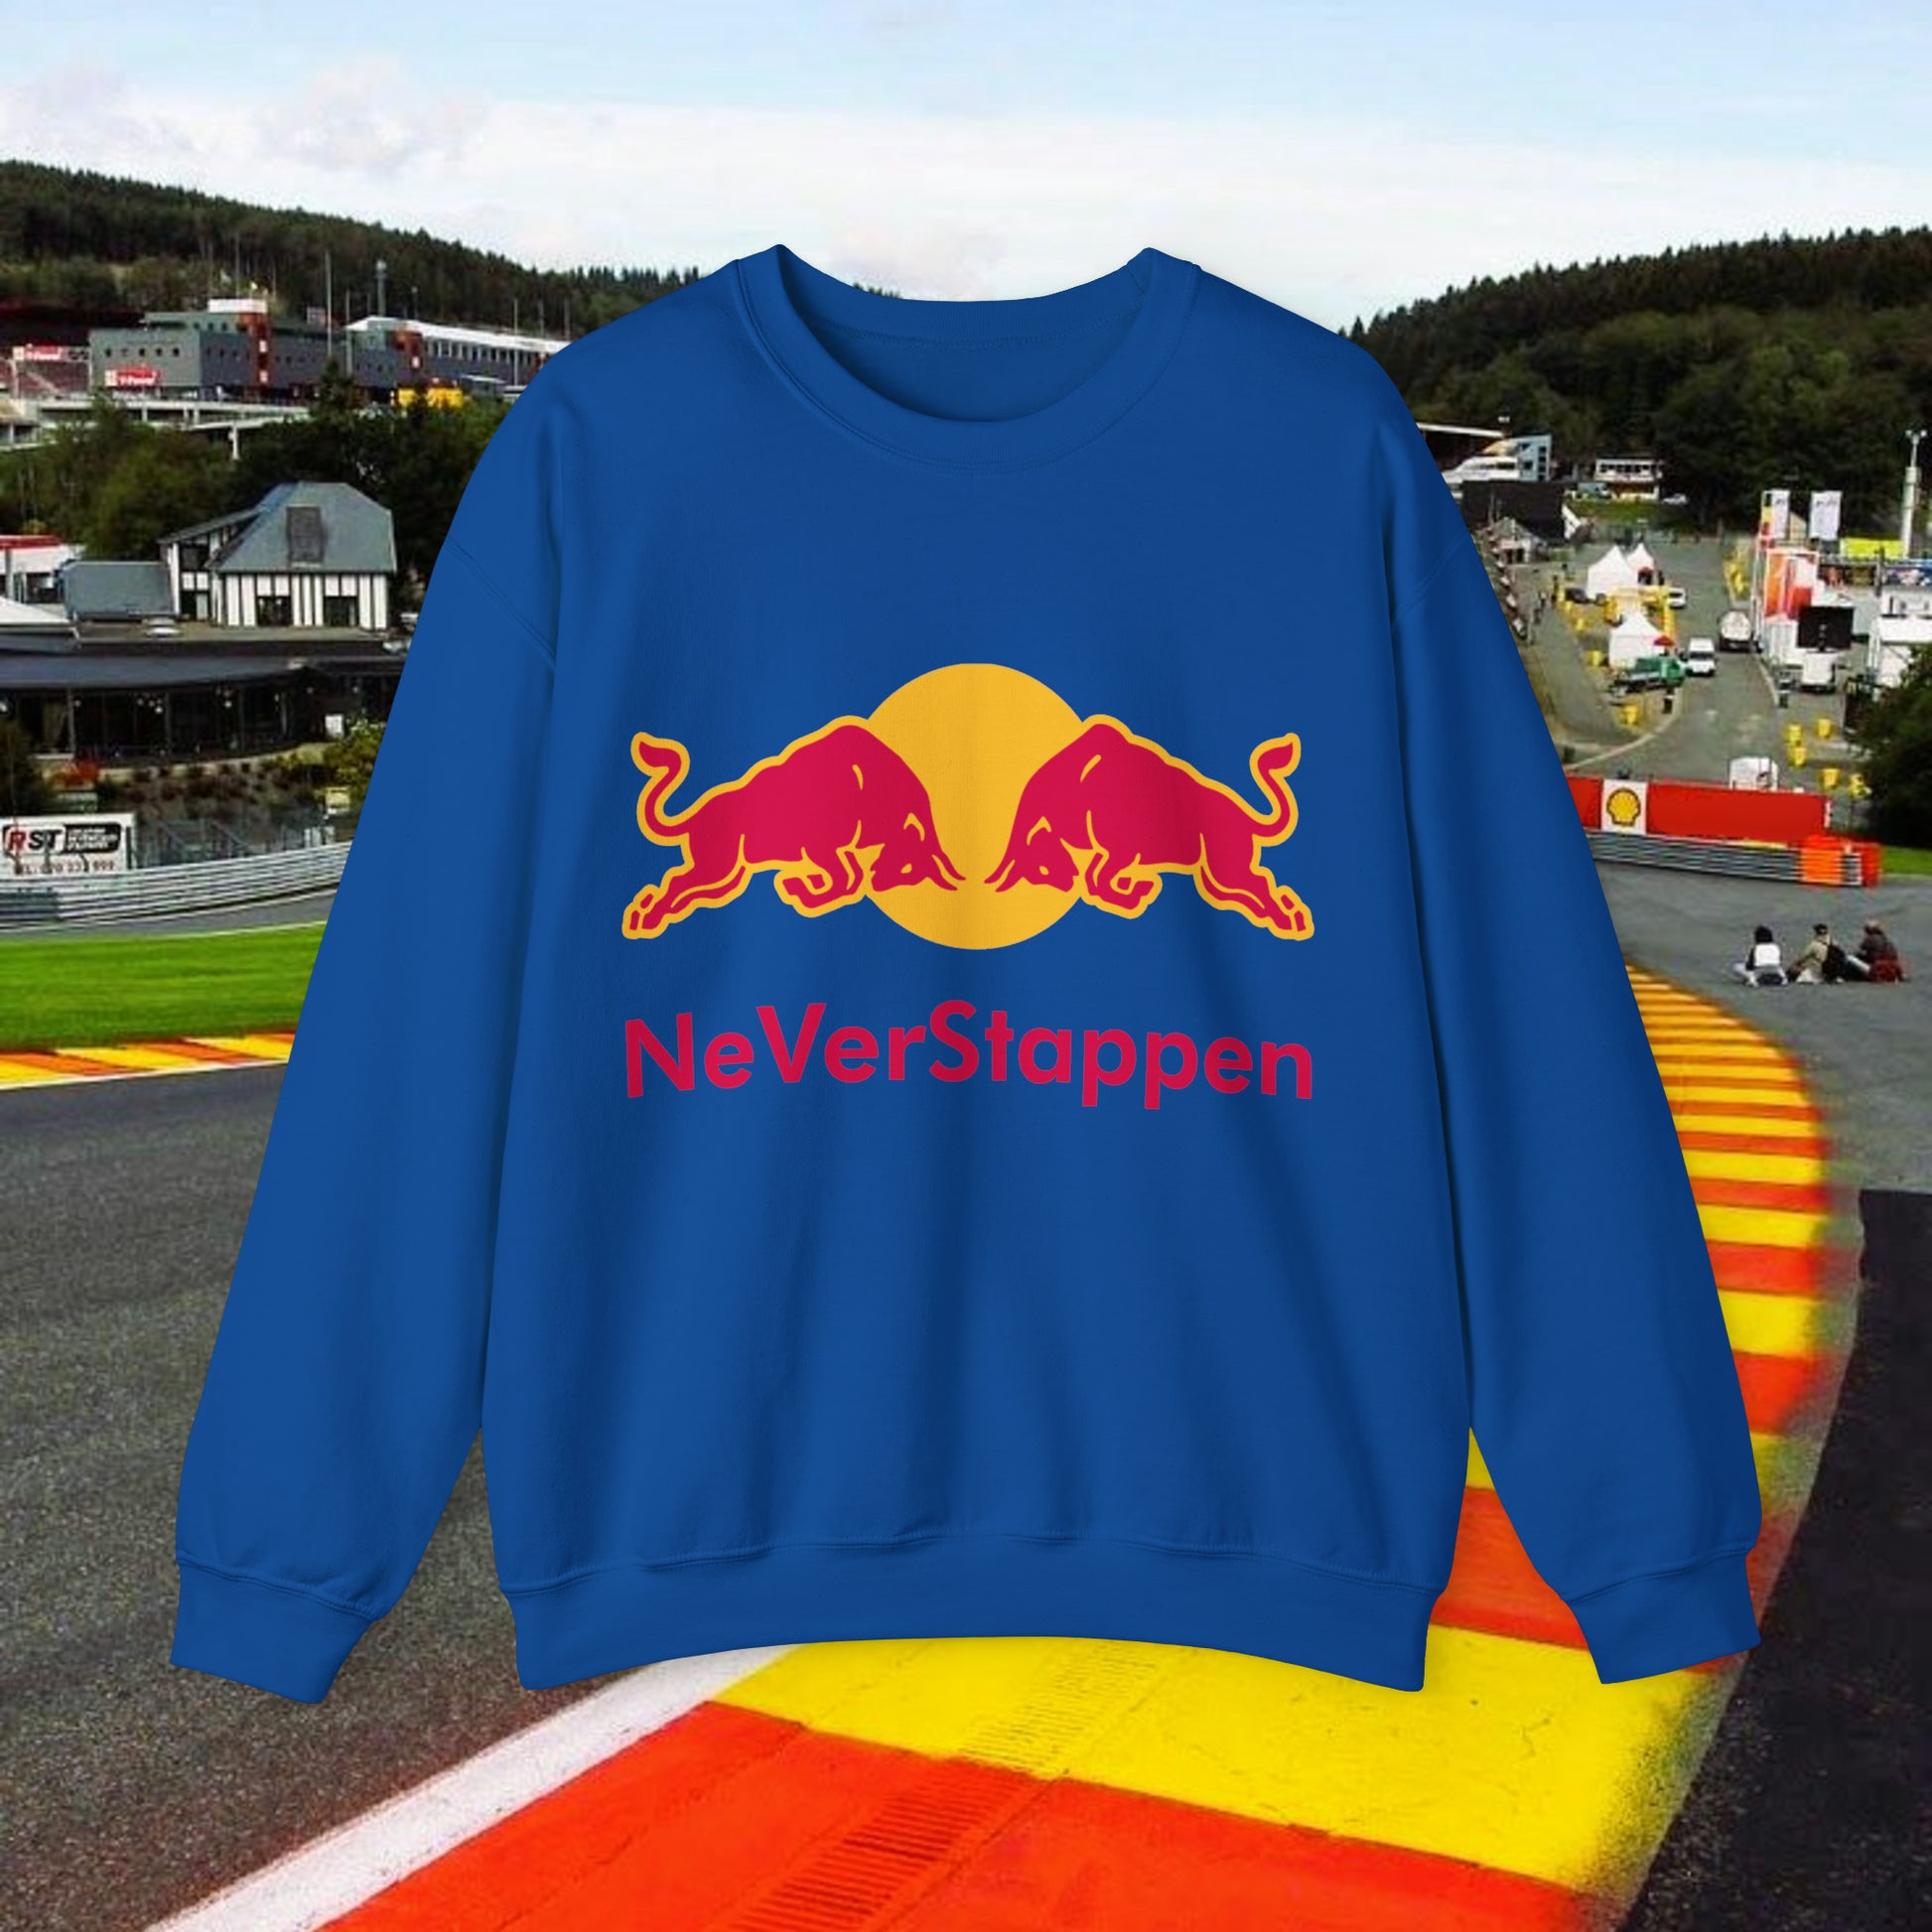 Max Verstappen Sweatshirt Verstappen Sweater Red Bull Sweatshirt F1 Jumper Formula 1 Shirt F1 Gift Formula 1 Gift Red Bull Fan Gift Racing Next Cult Brand F1, Max Verstappen, Red Bull